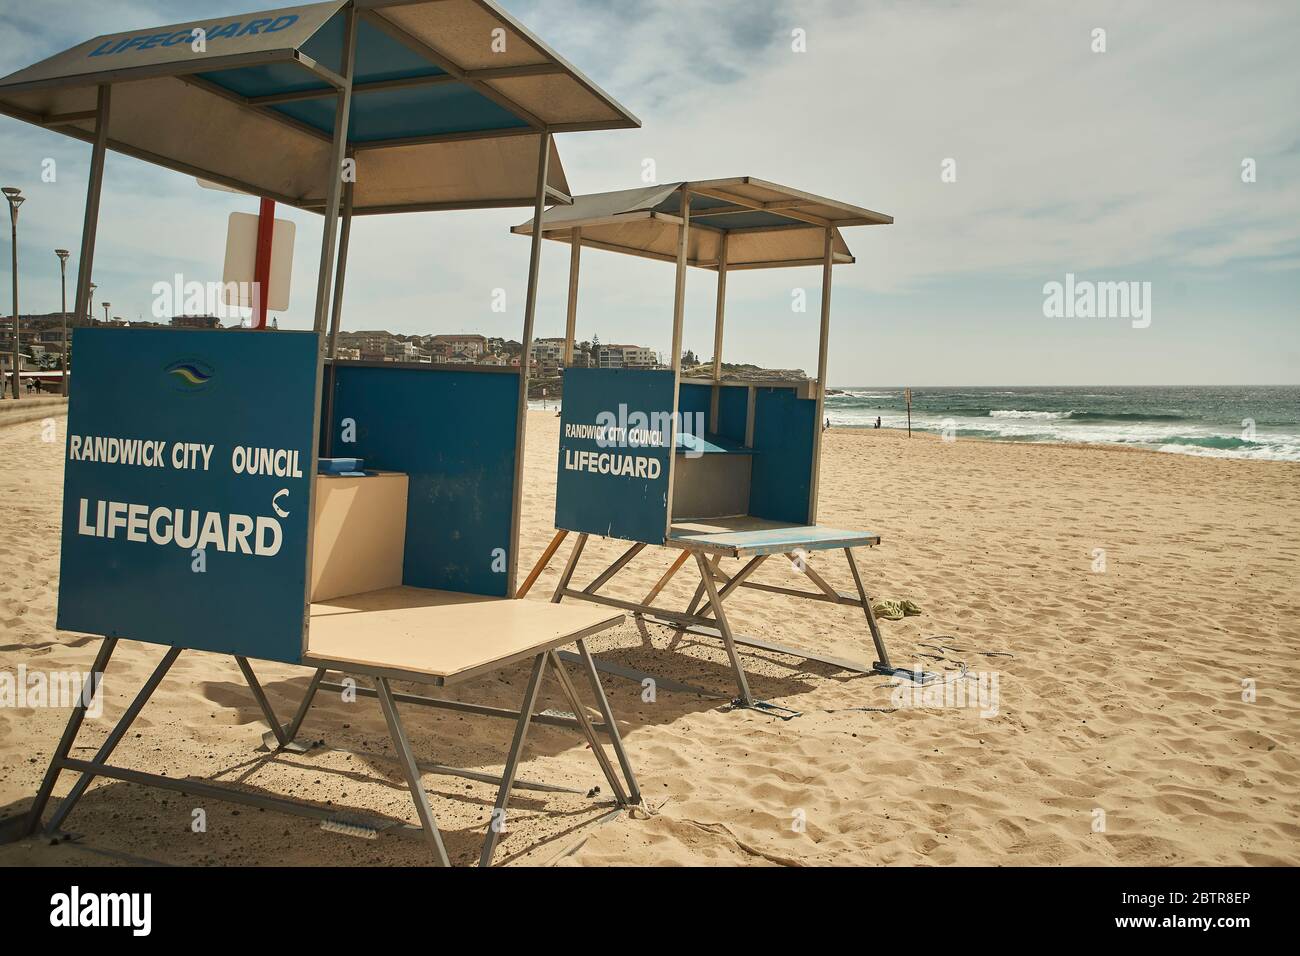 Lifeguard service at the Maroubra beach in Sydney, Australia Stock Photo